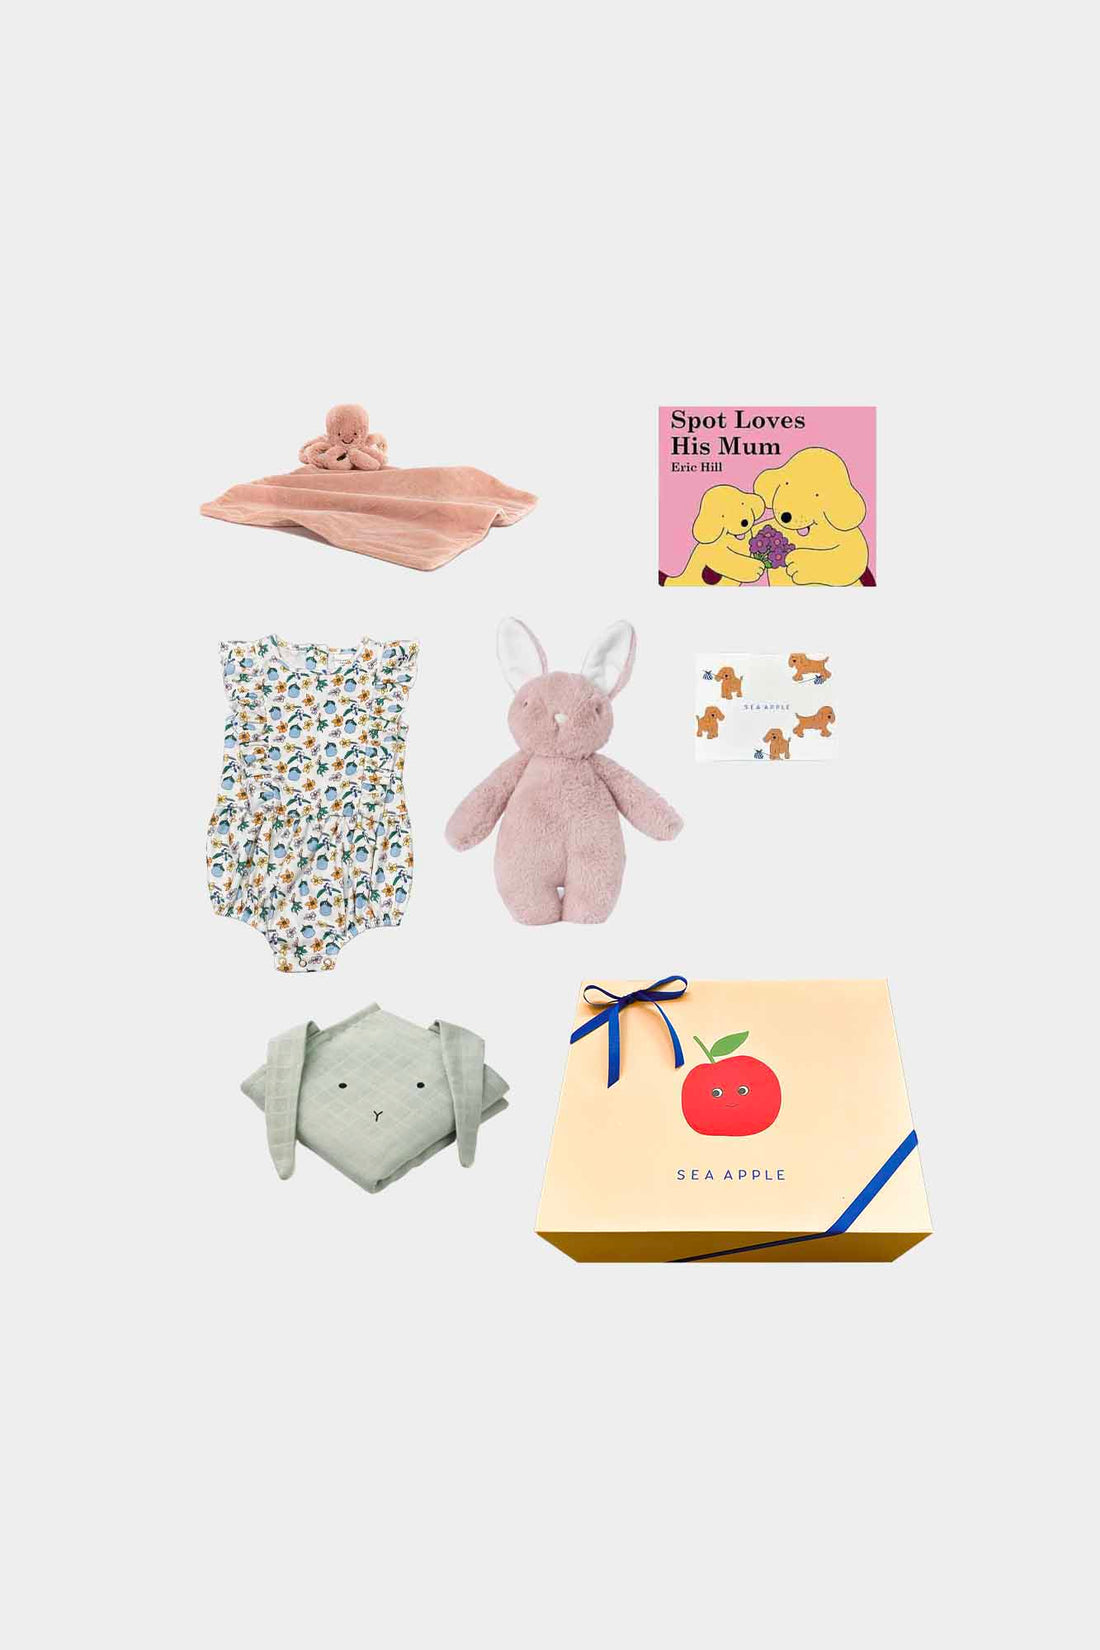 Organic Baby Gift Set - New York Onesie & NYC Rattle Toys